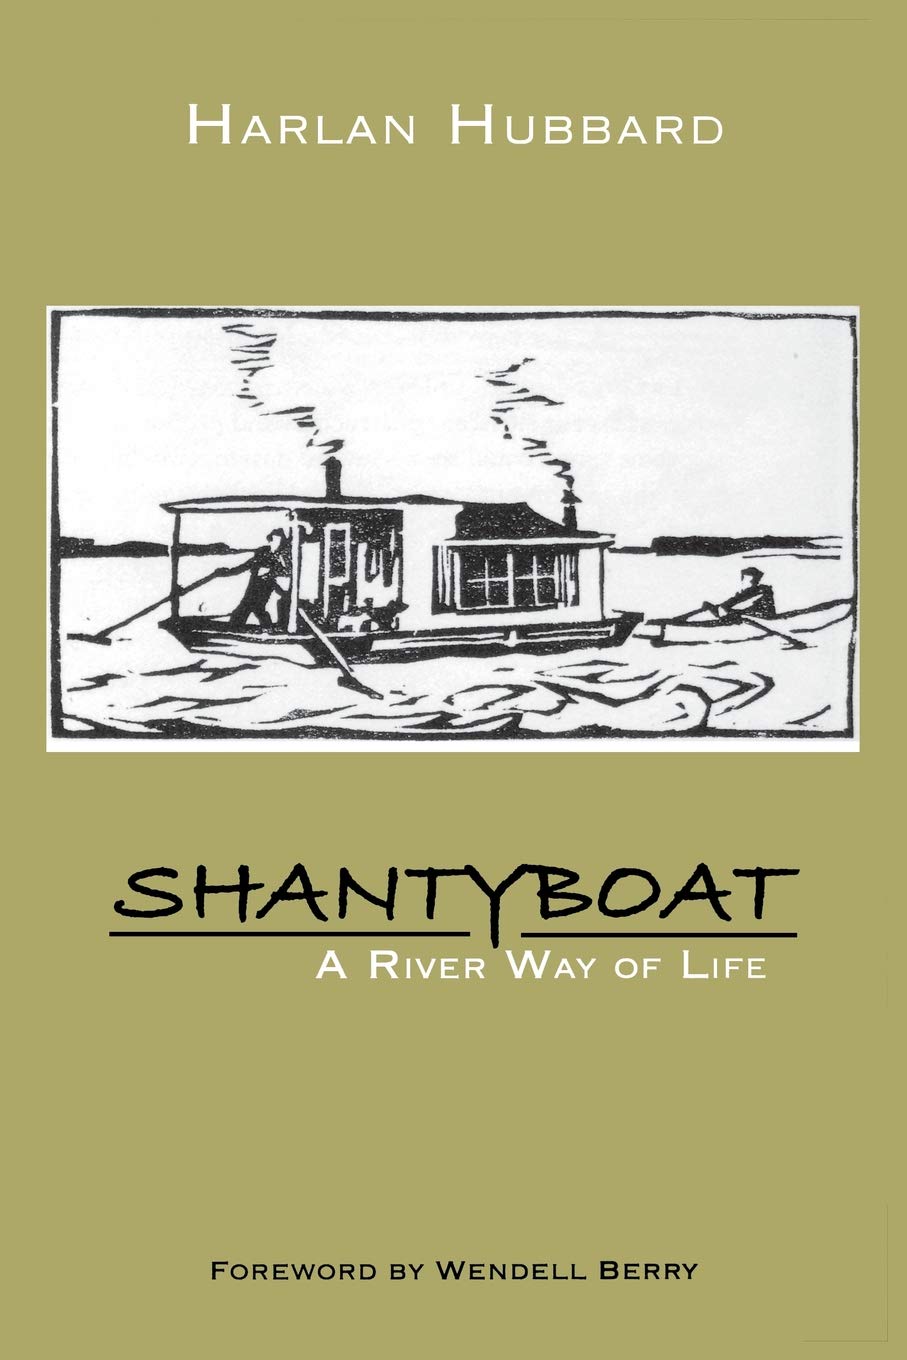 Shantyboat: A River Way of Life